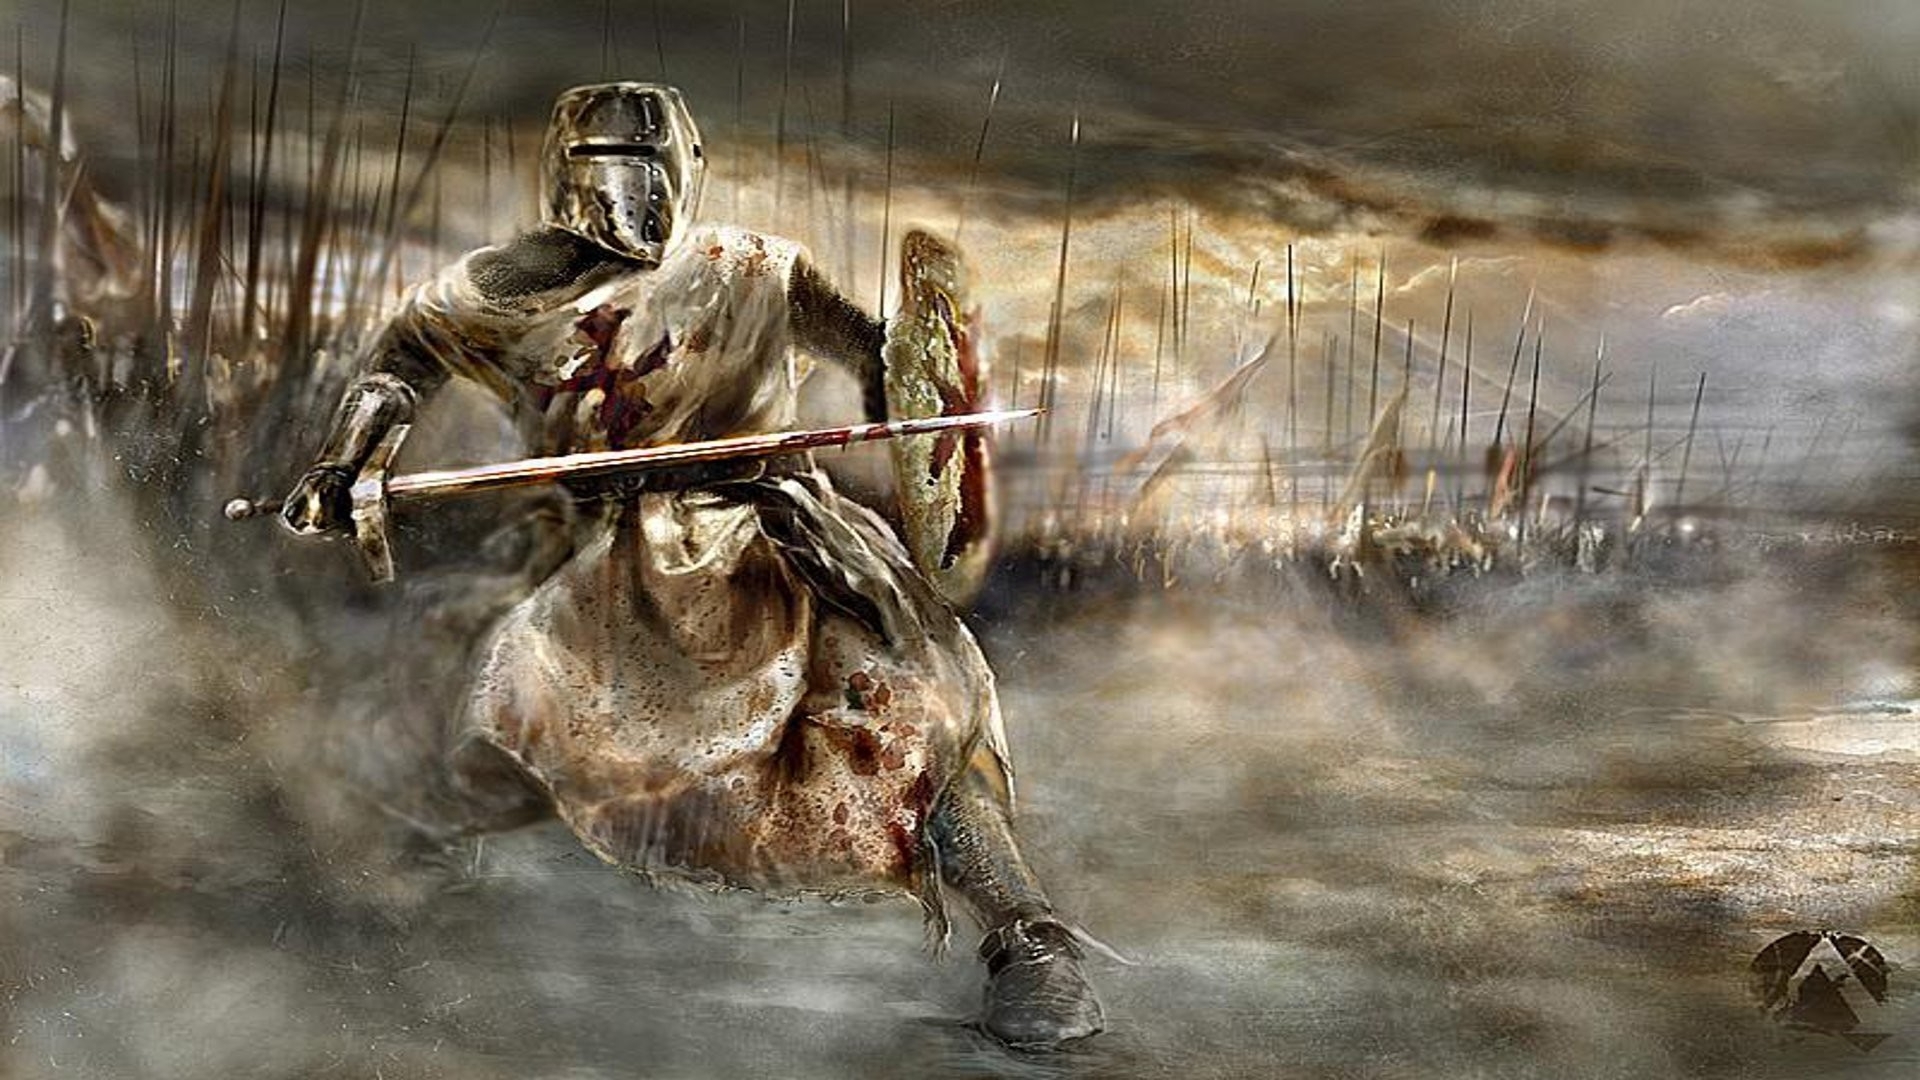 10 Top And Most Current Crusader Knight Templar Wallpaper for Desktop Compu...